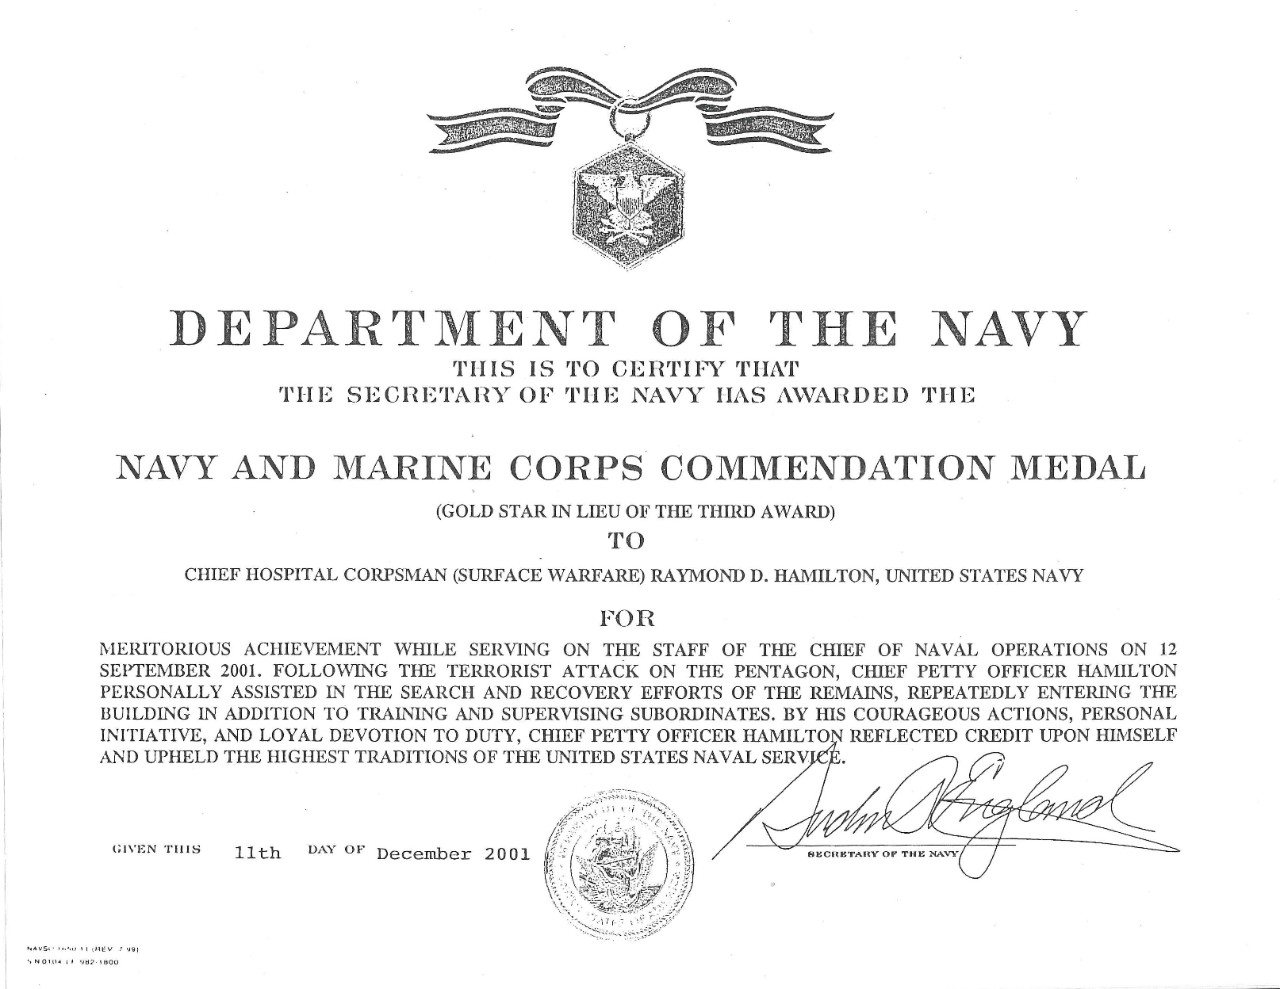 Hamilton, Darrell (Raymond) Navy and Marine Corps Commendation Medal